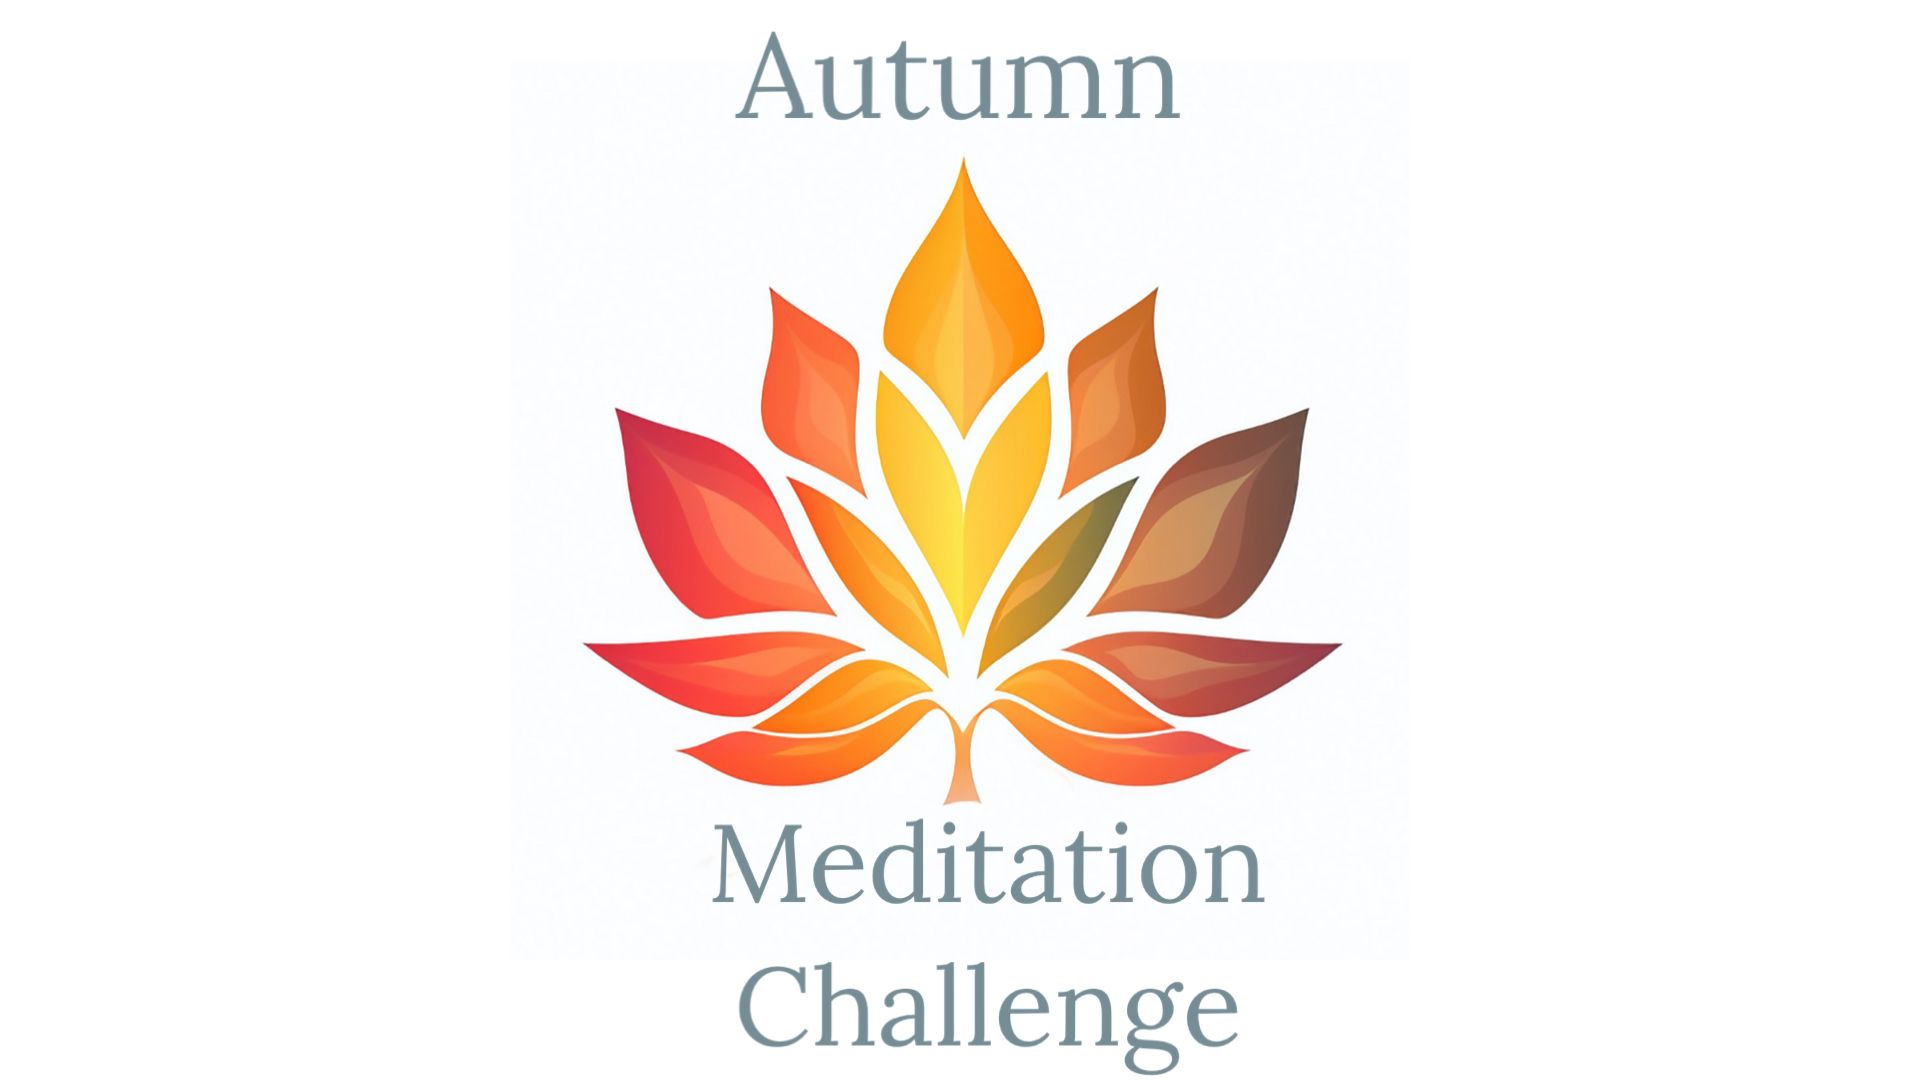 A modern minimalist autumn leaf logo entitled Autumn Meditation Challenge